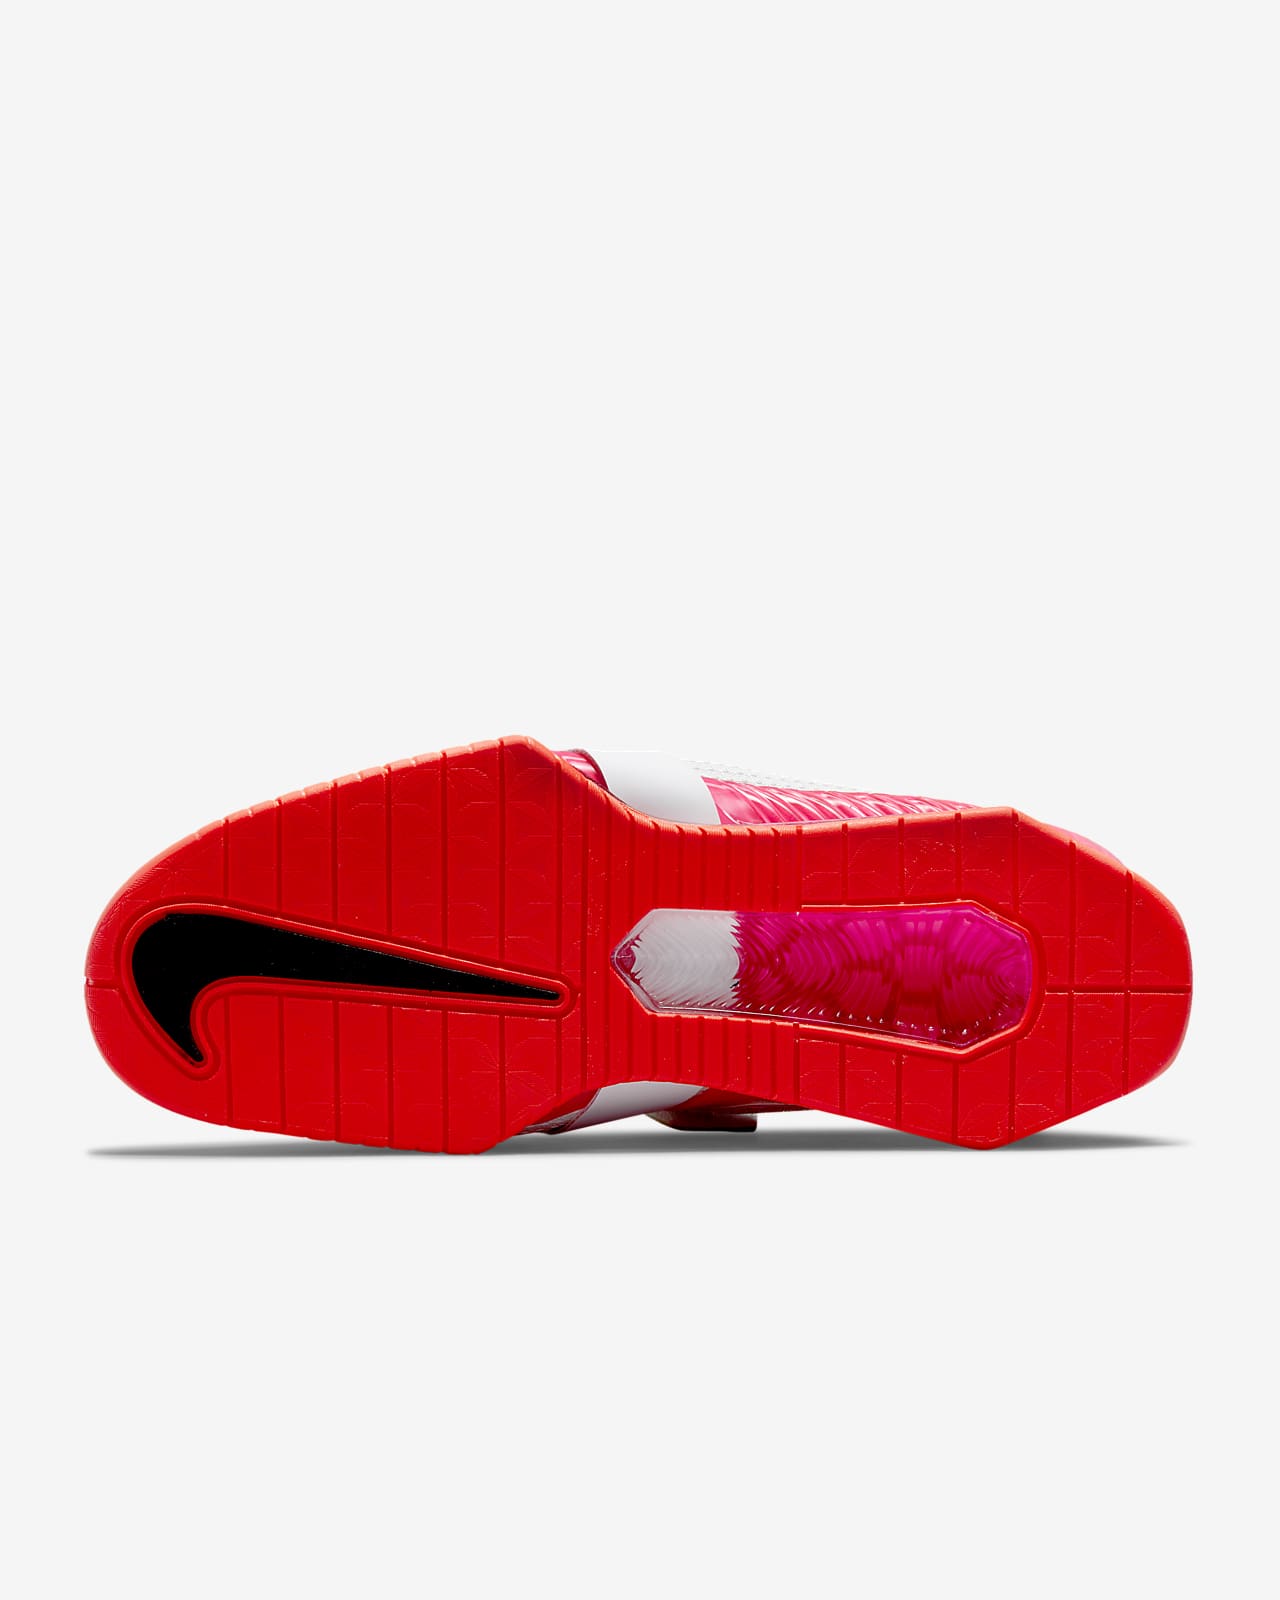 Nike Romaleos Weightlifting Shoe.